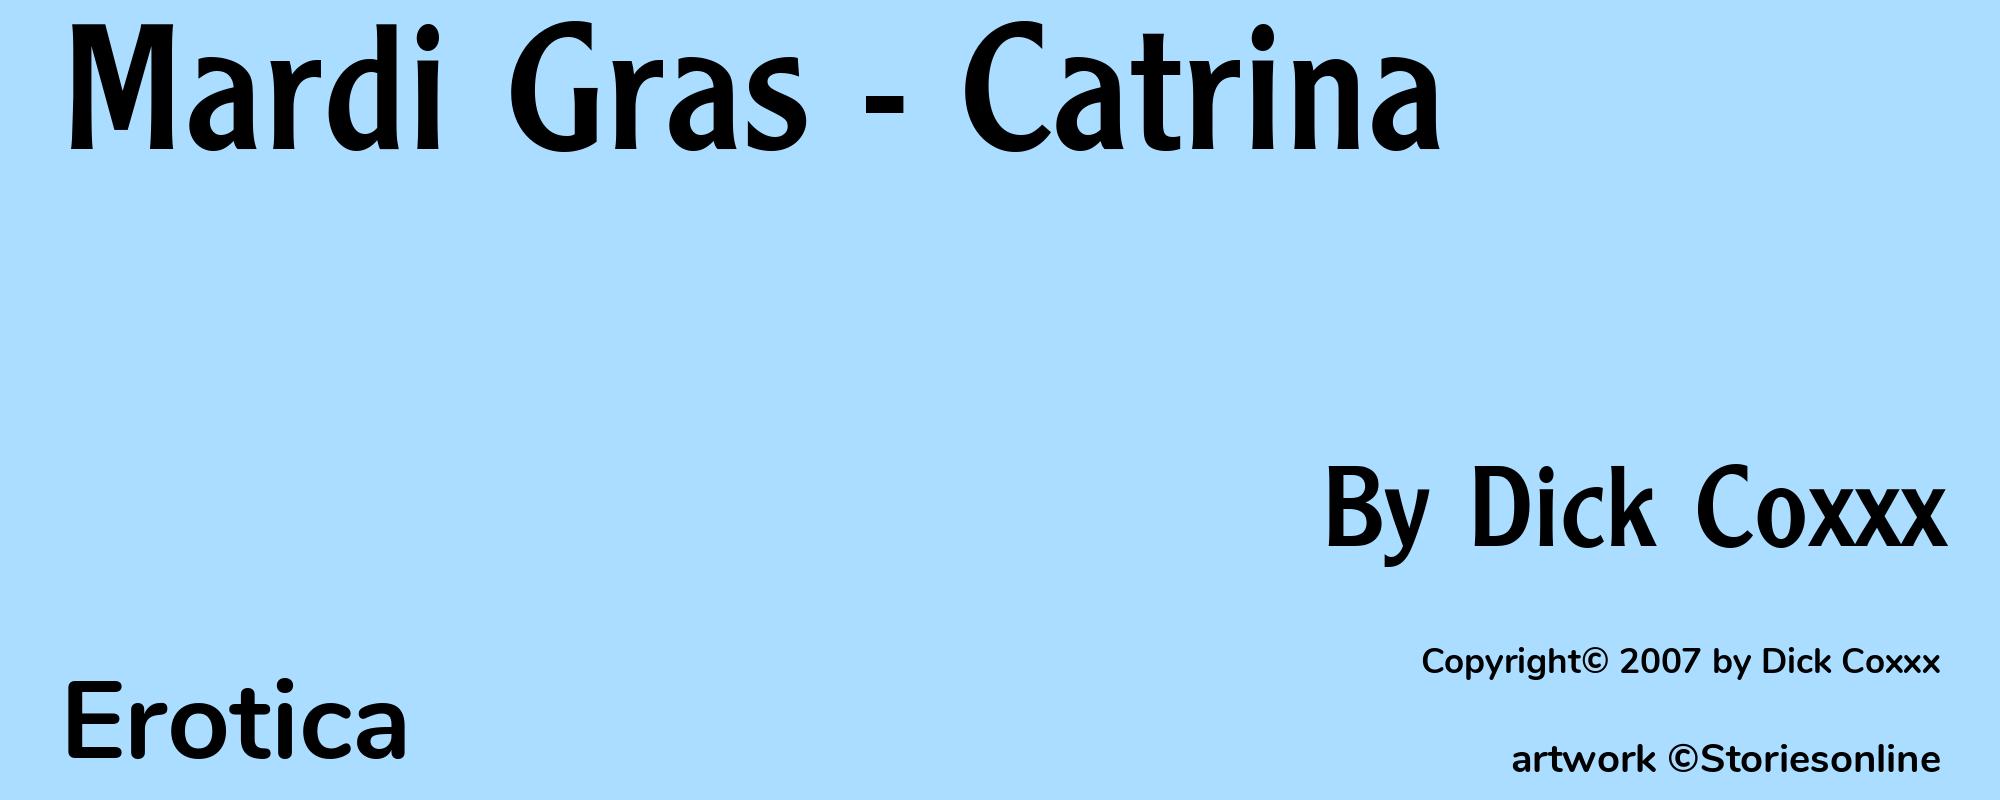 Mardi Gras - Catrina - Cover